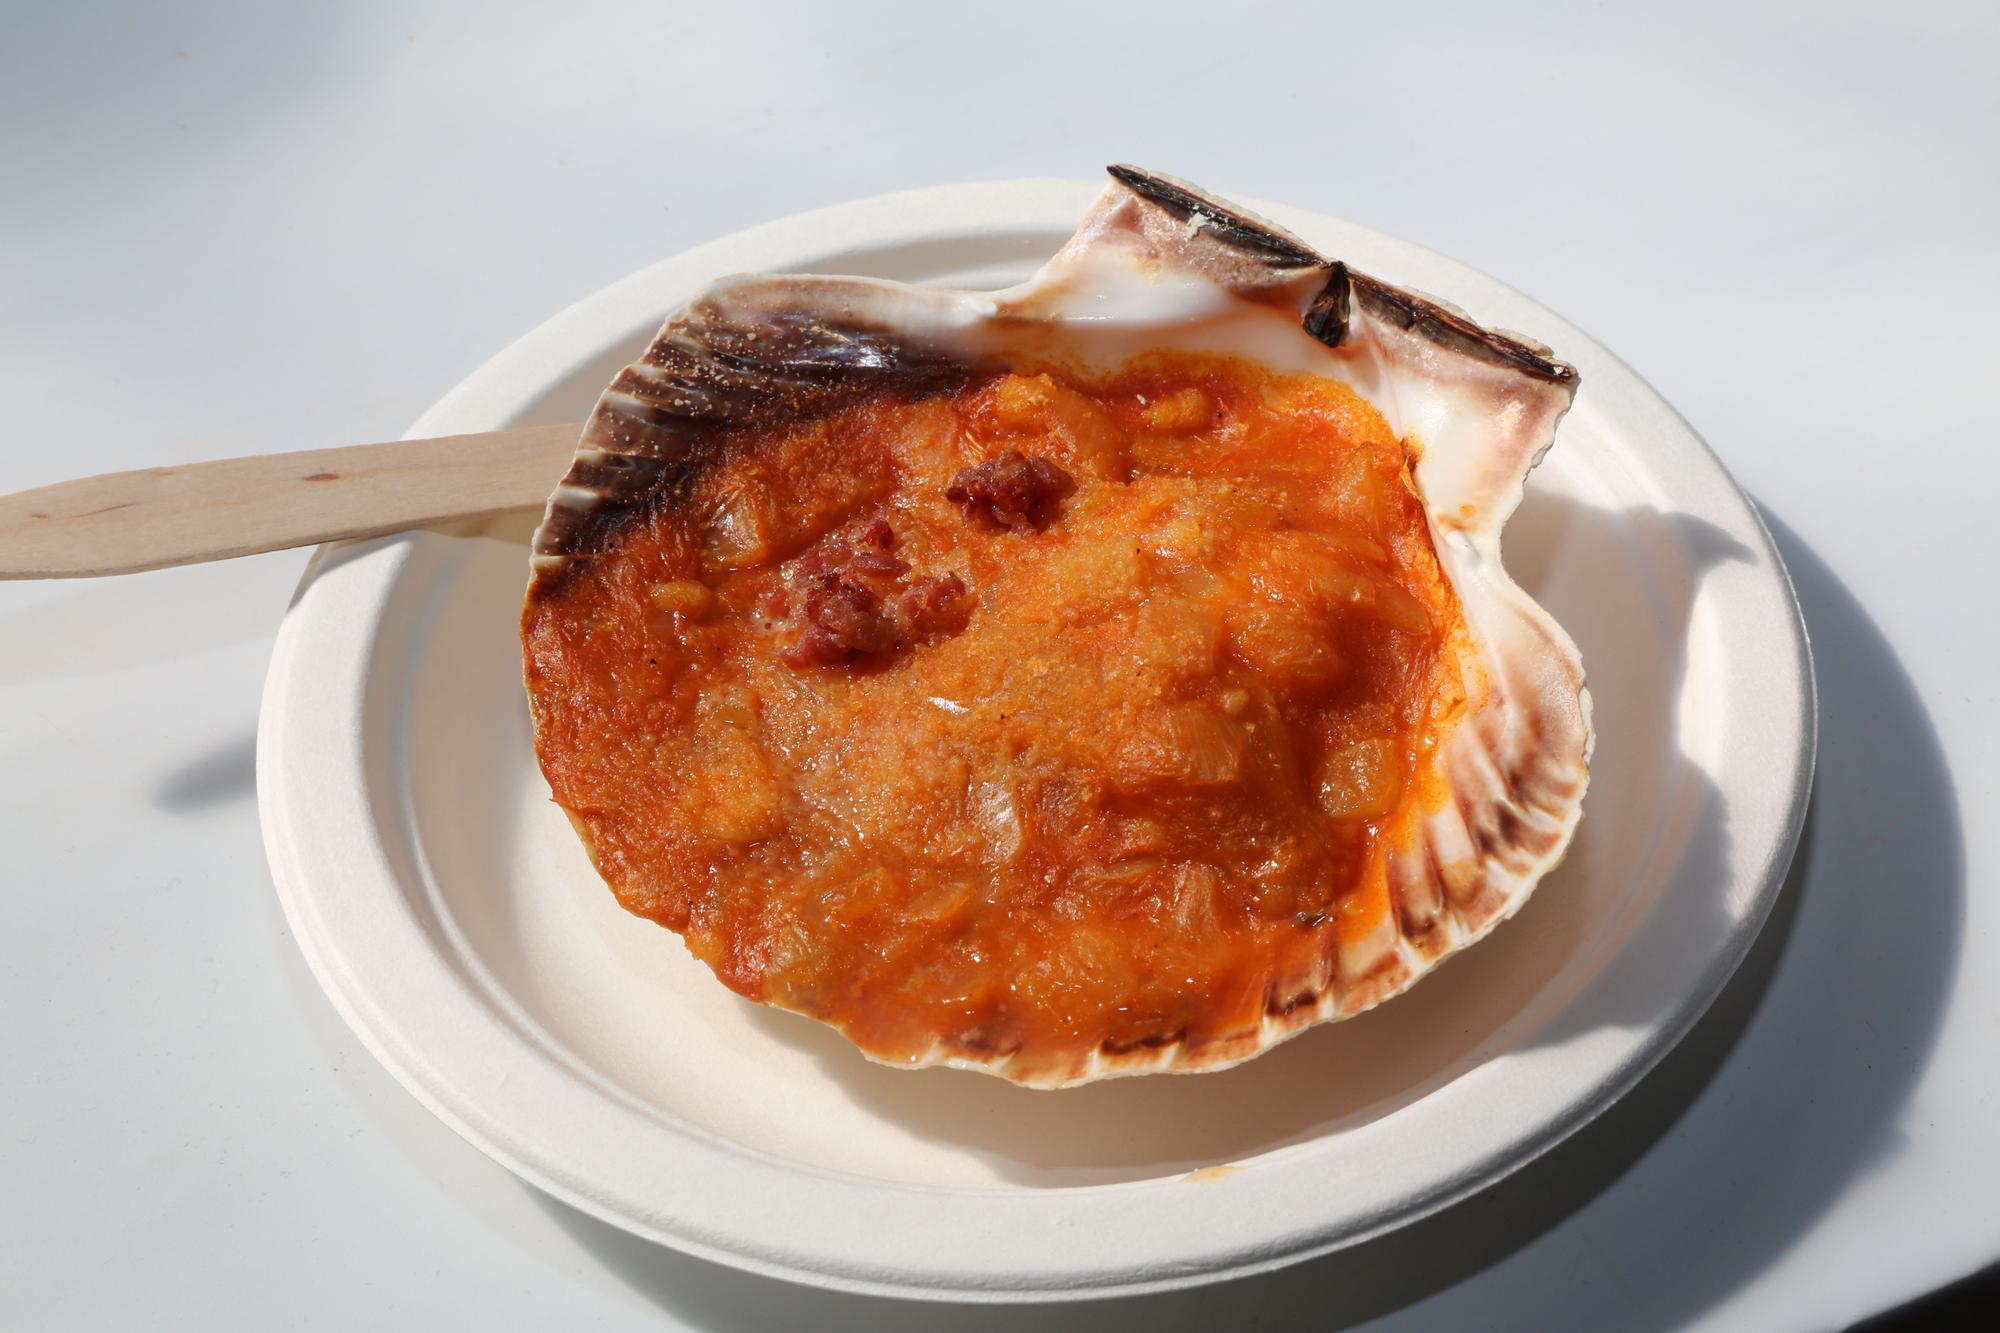 Festa do Marisco de O Grove, la cocina del mar.